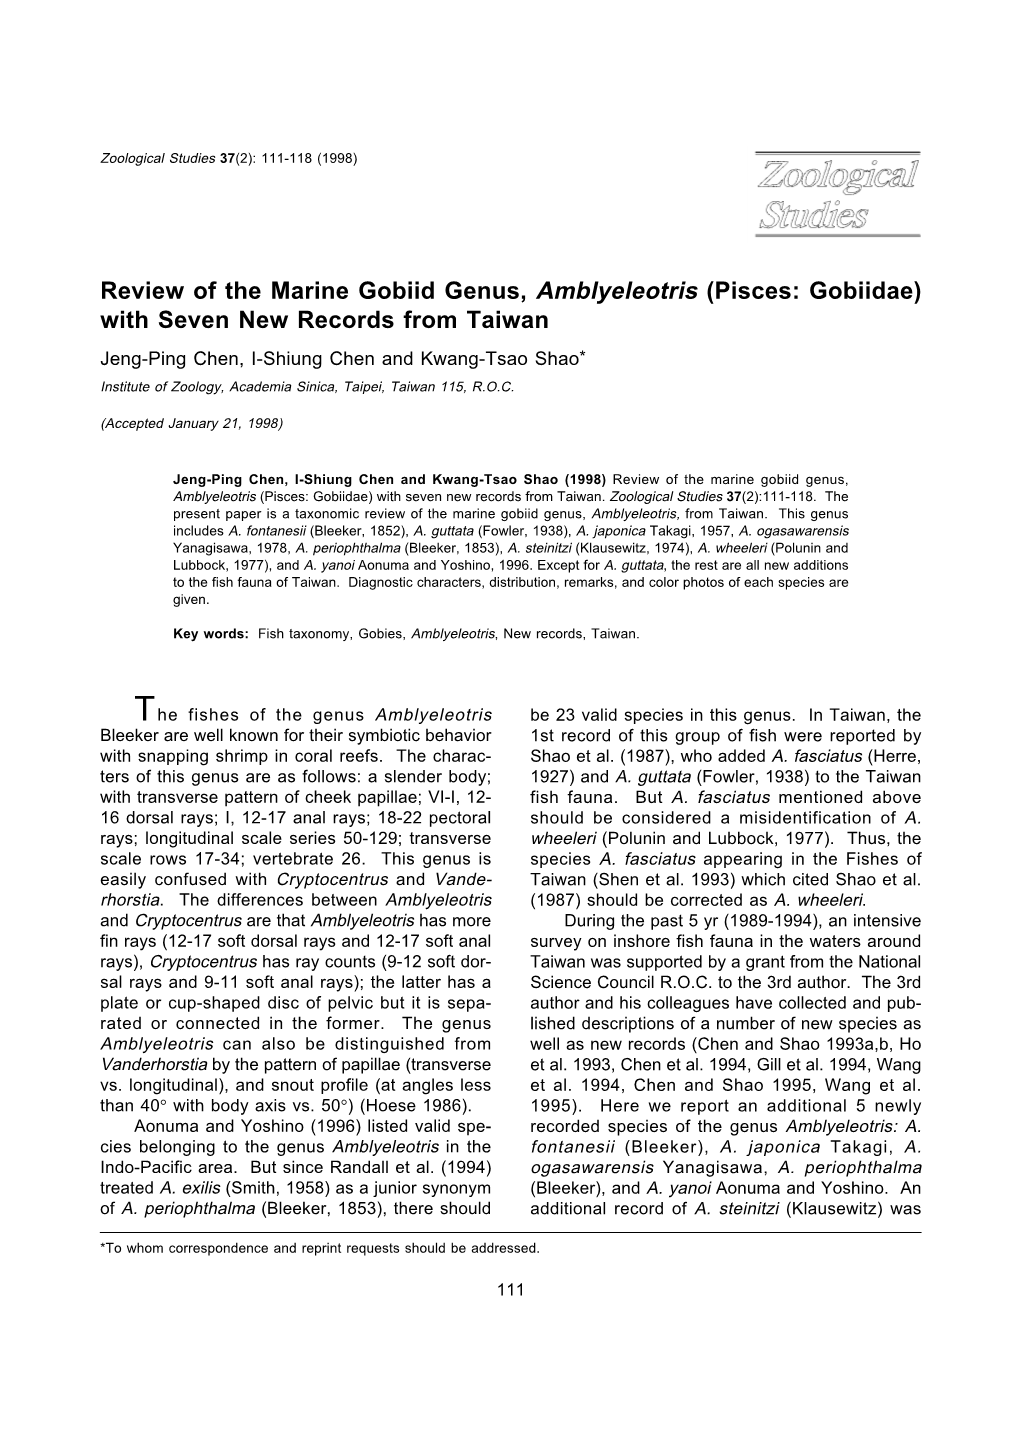 Review of the Marine Gobiid Genus, Amblyeleotris